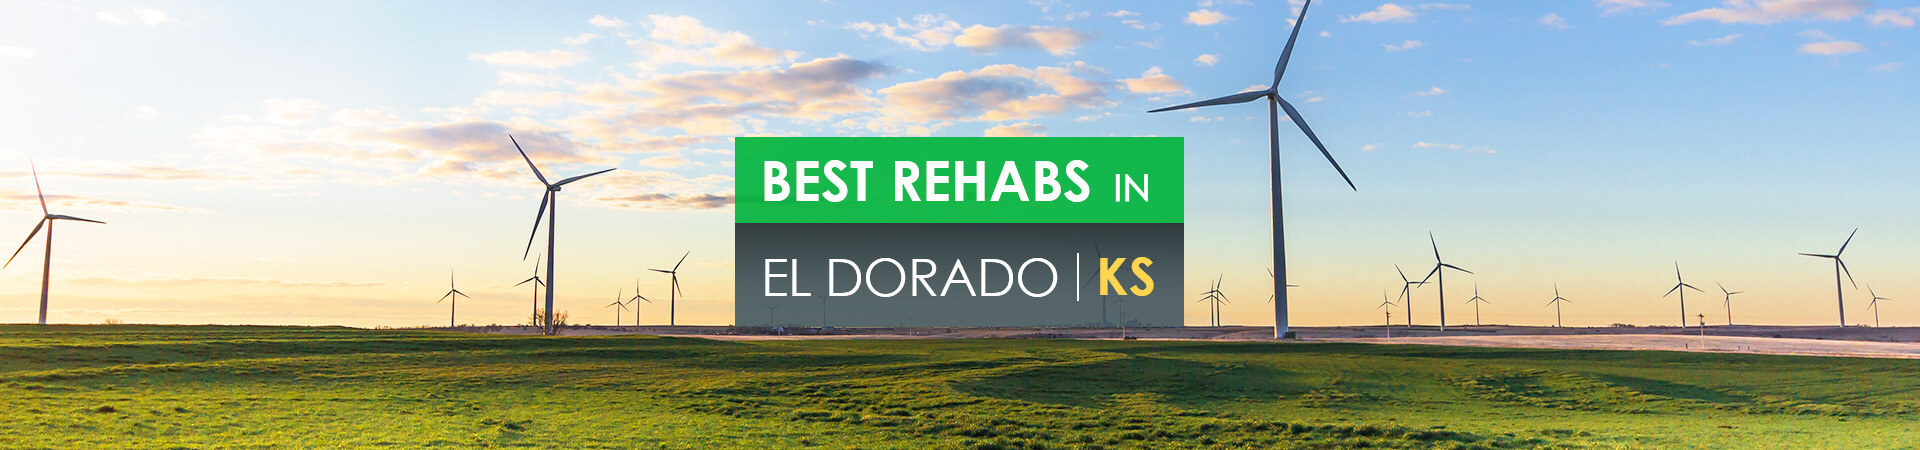 Best rehabs in El Dorado, KS